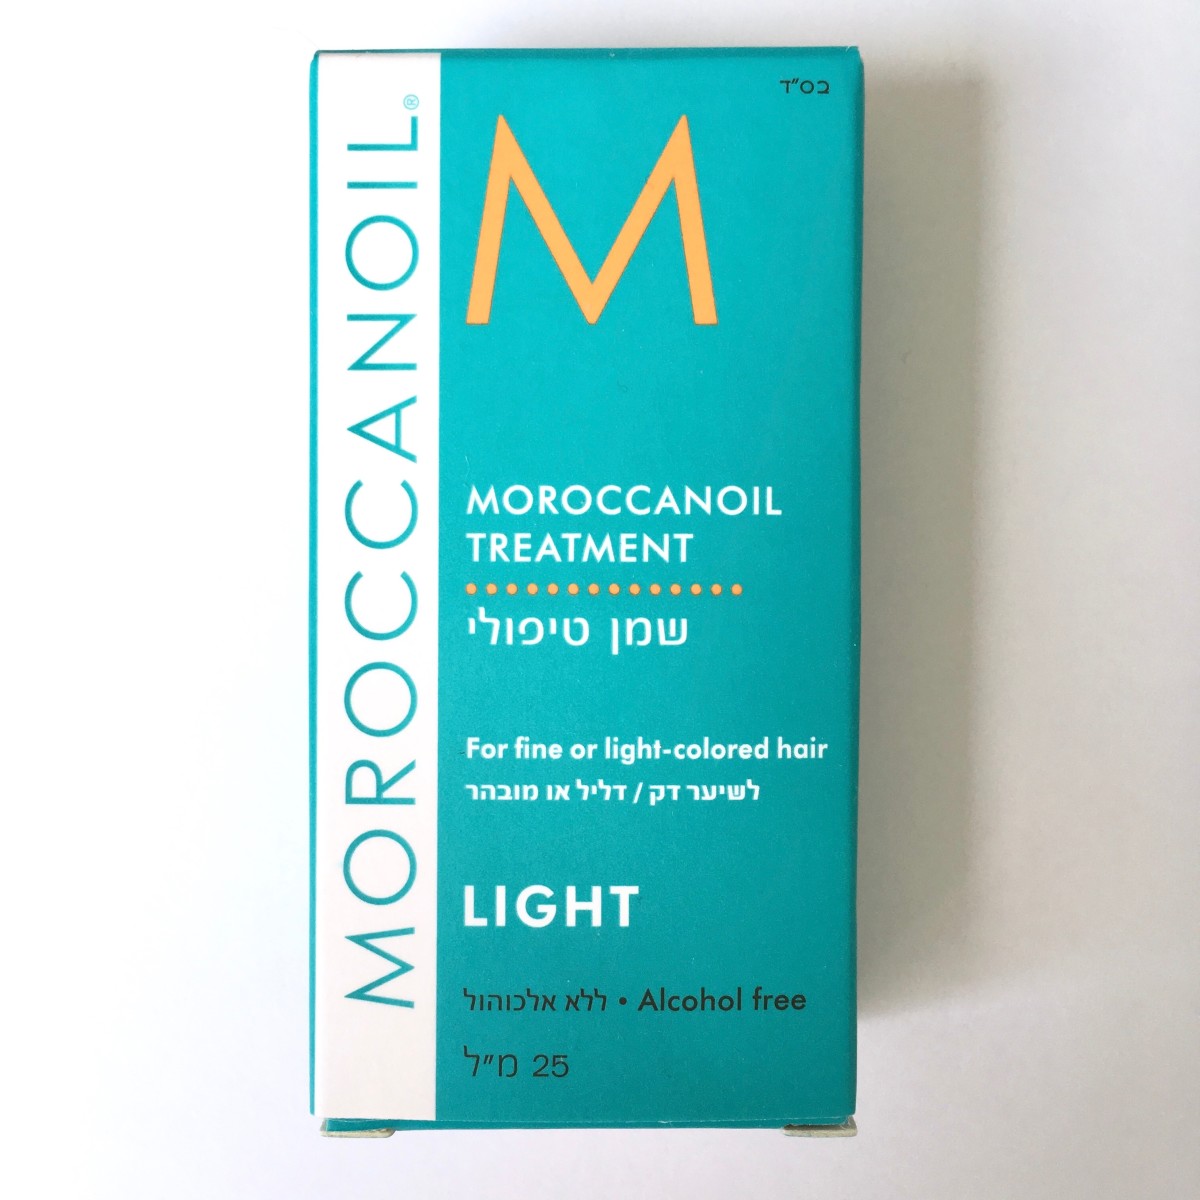 Morocconoil Treatment Light